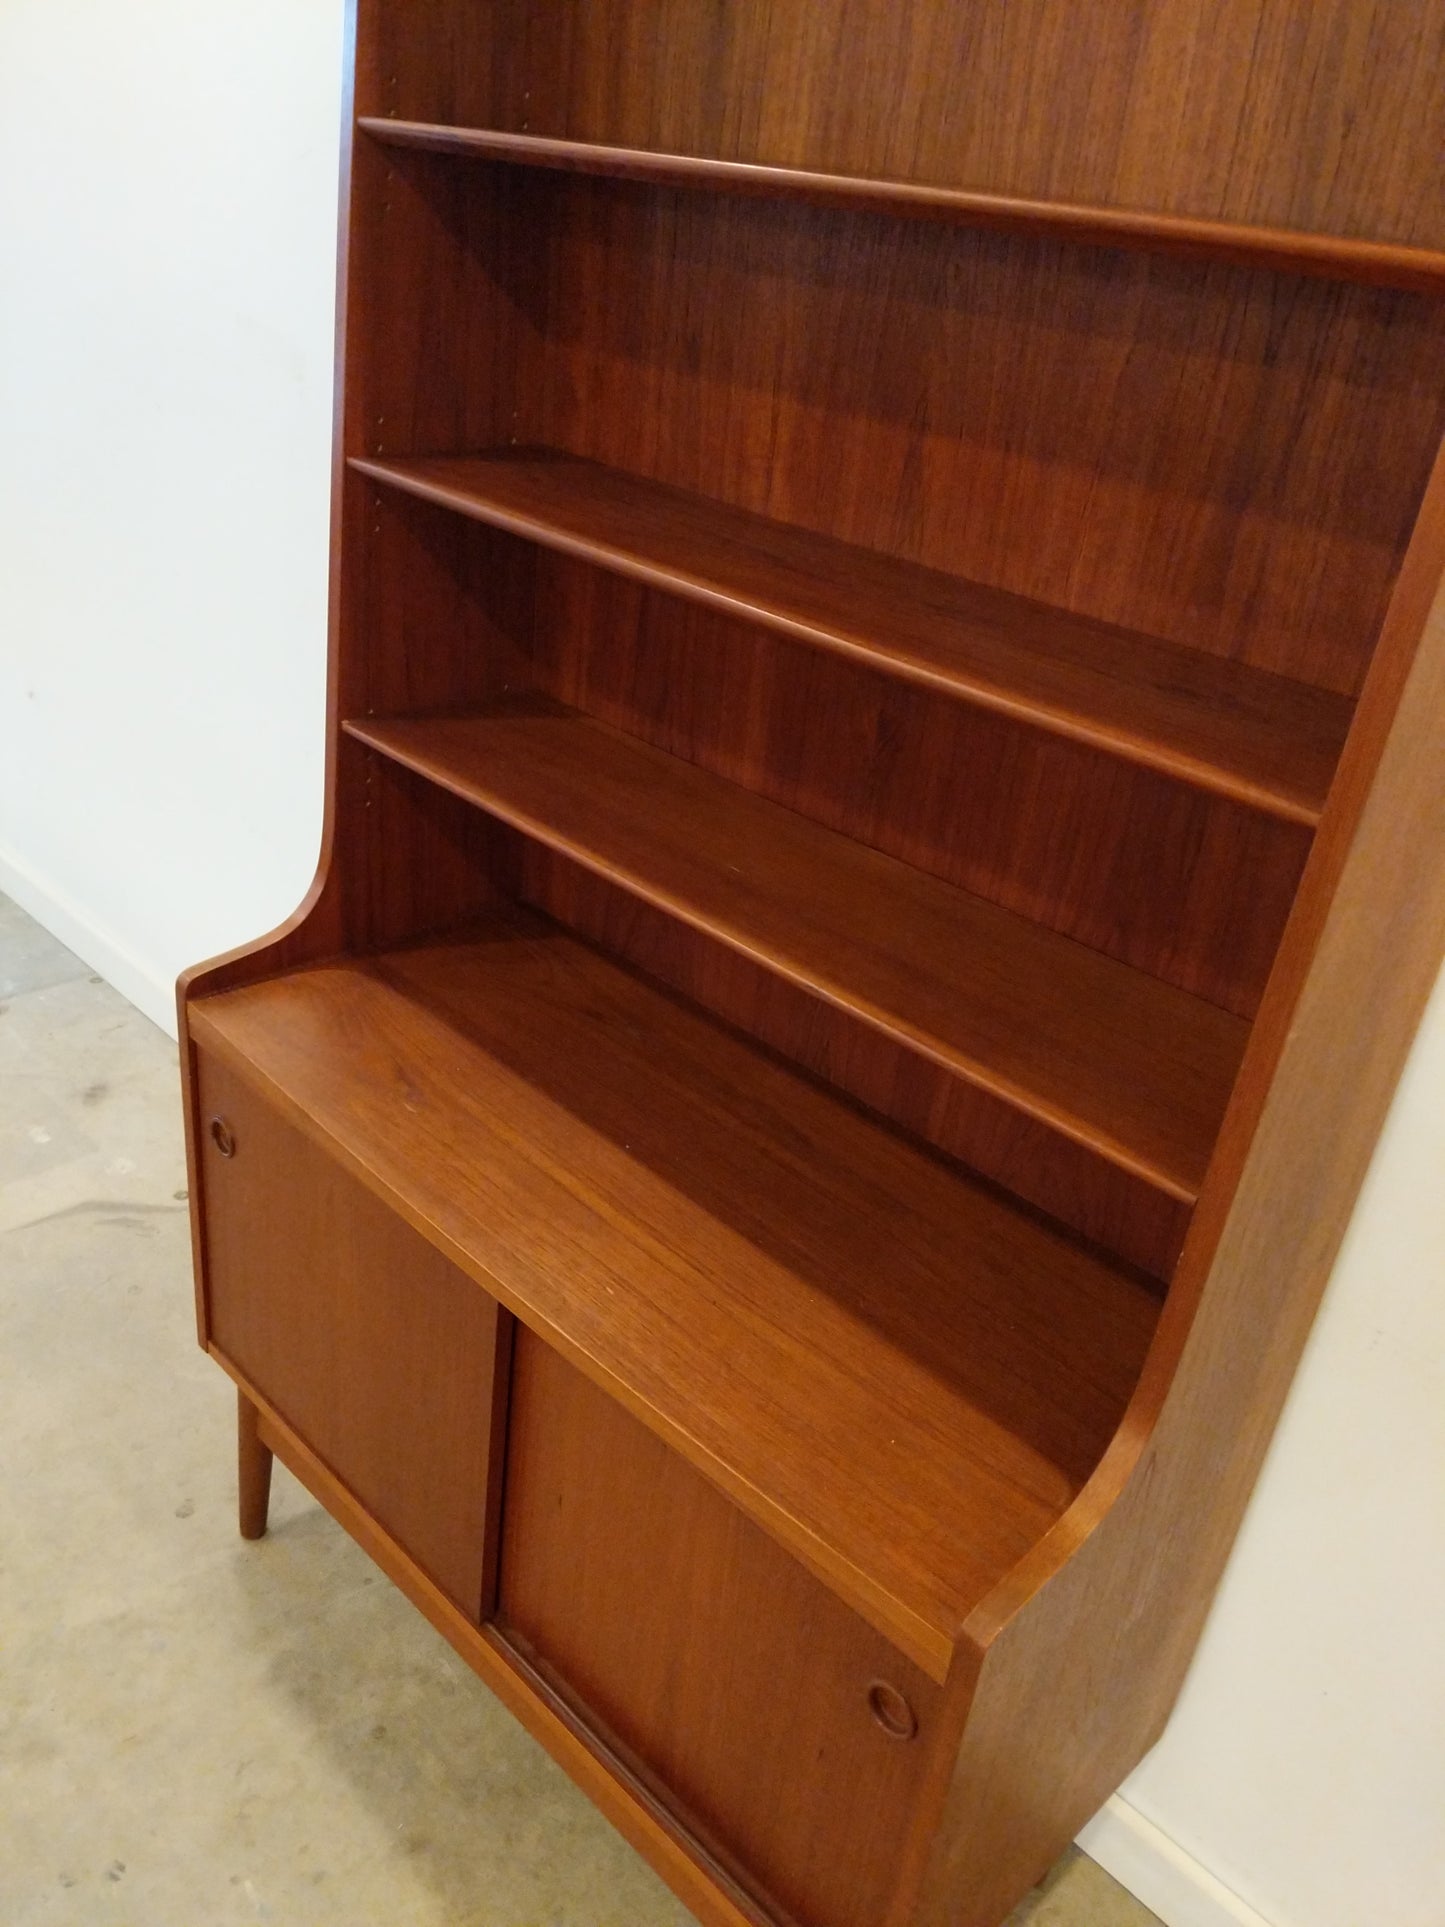 Vintage Danish Modern Teak Bookshelf / Cabinet